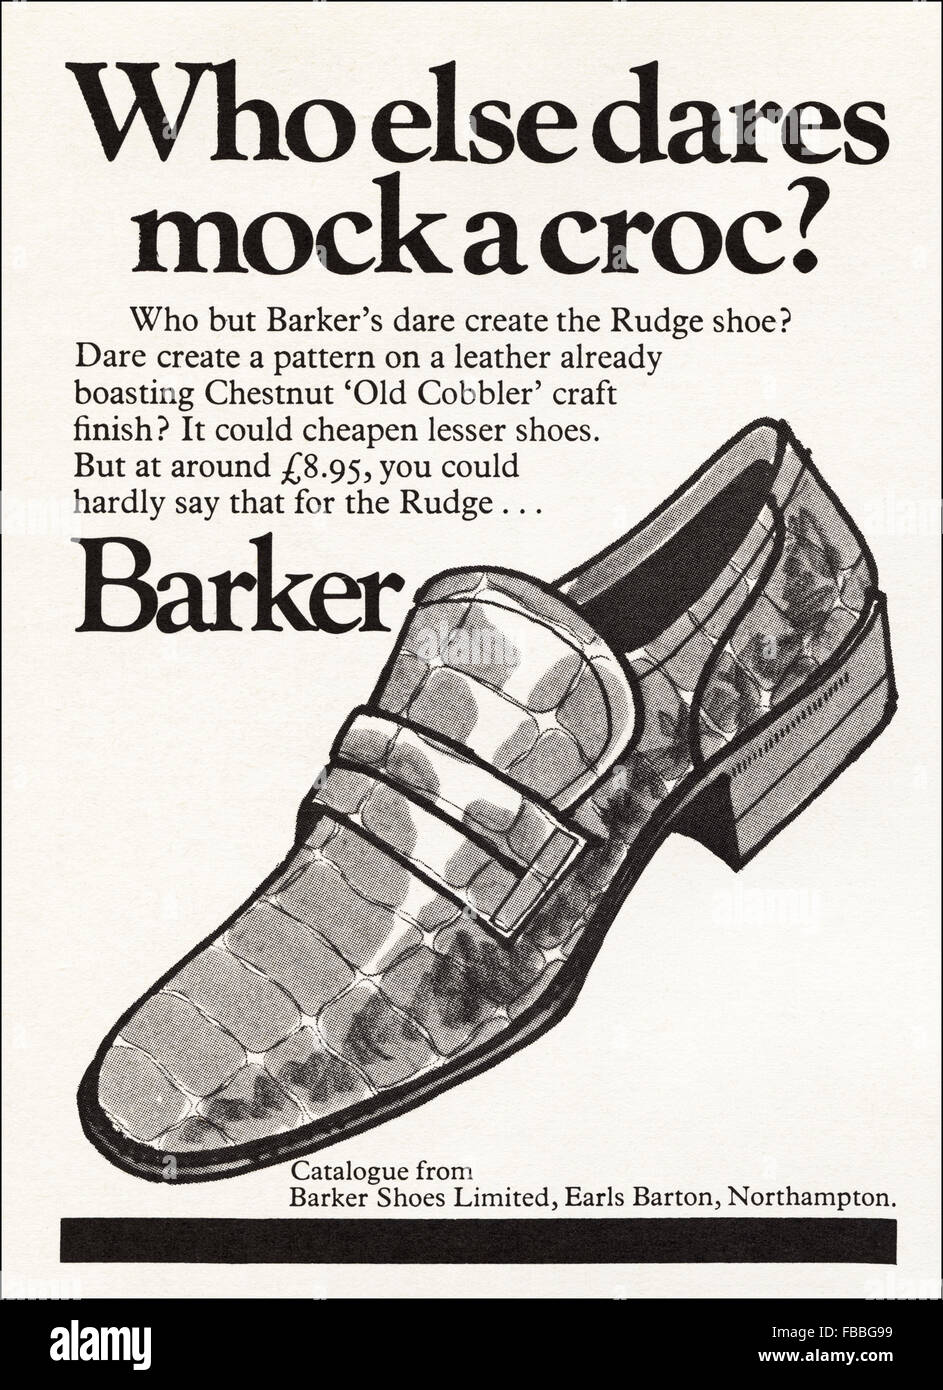 barker shoes limited